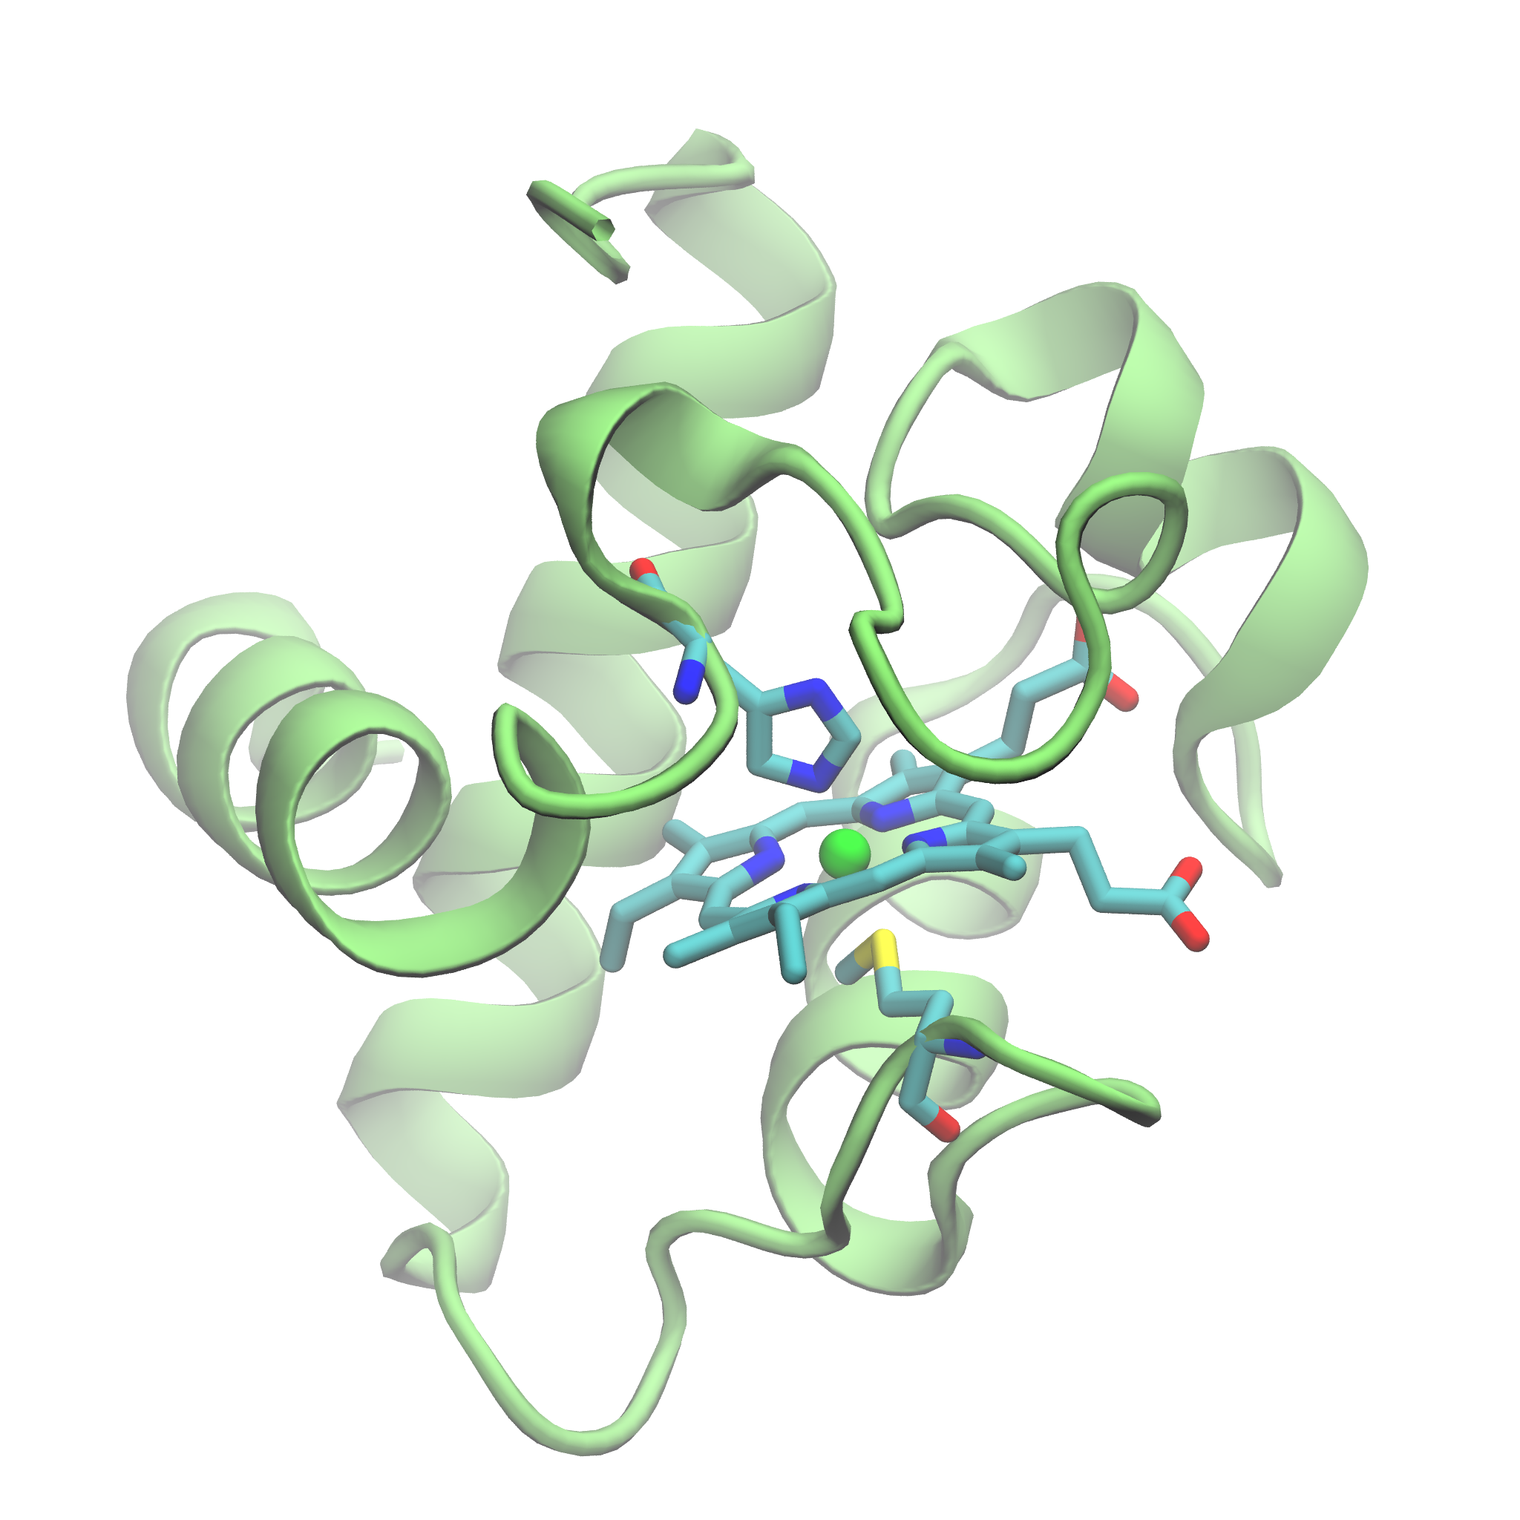 Structure of Cytochrome C6 from Chlamydomonas reinhardtti (PDB:1cyj)